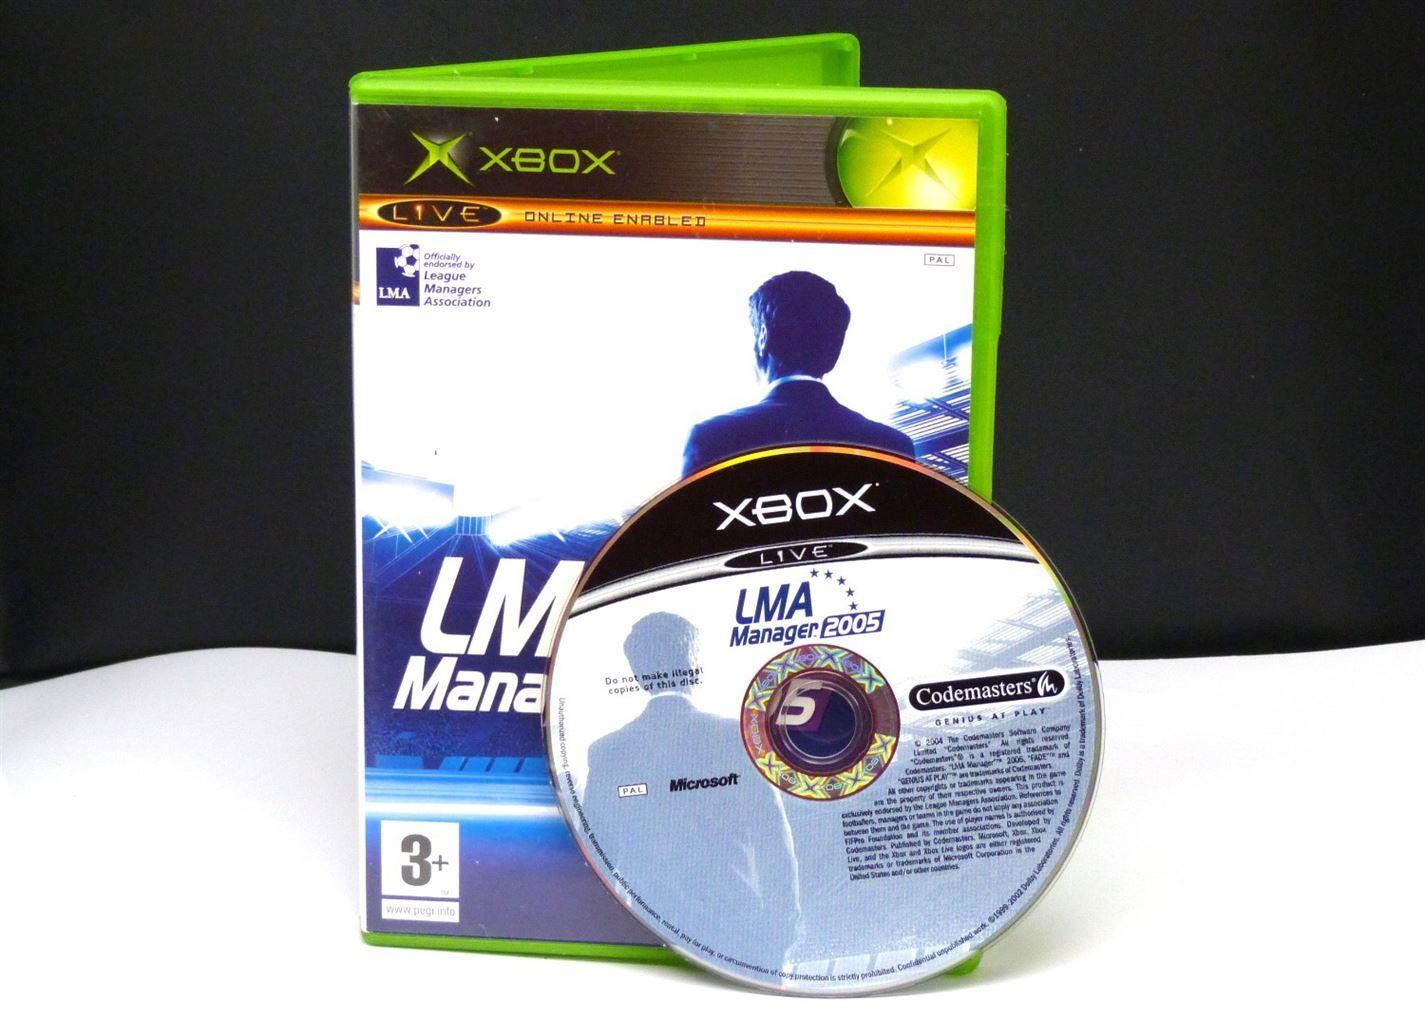 LMA Manager 2005 (Xbox) - UK Seller NP